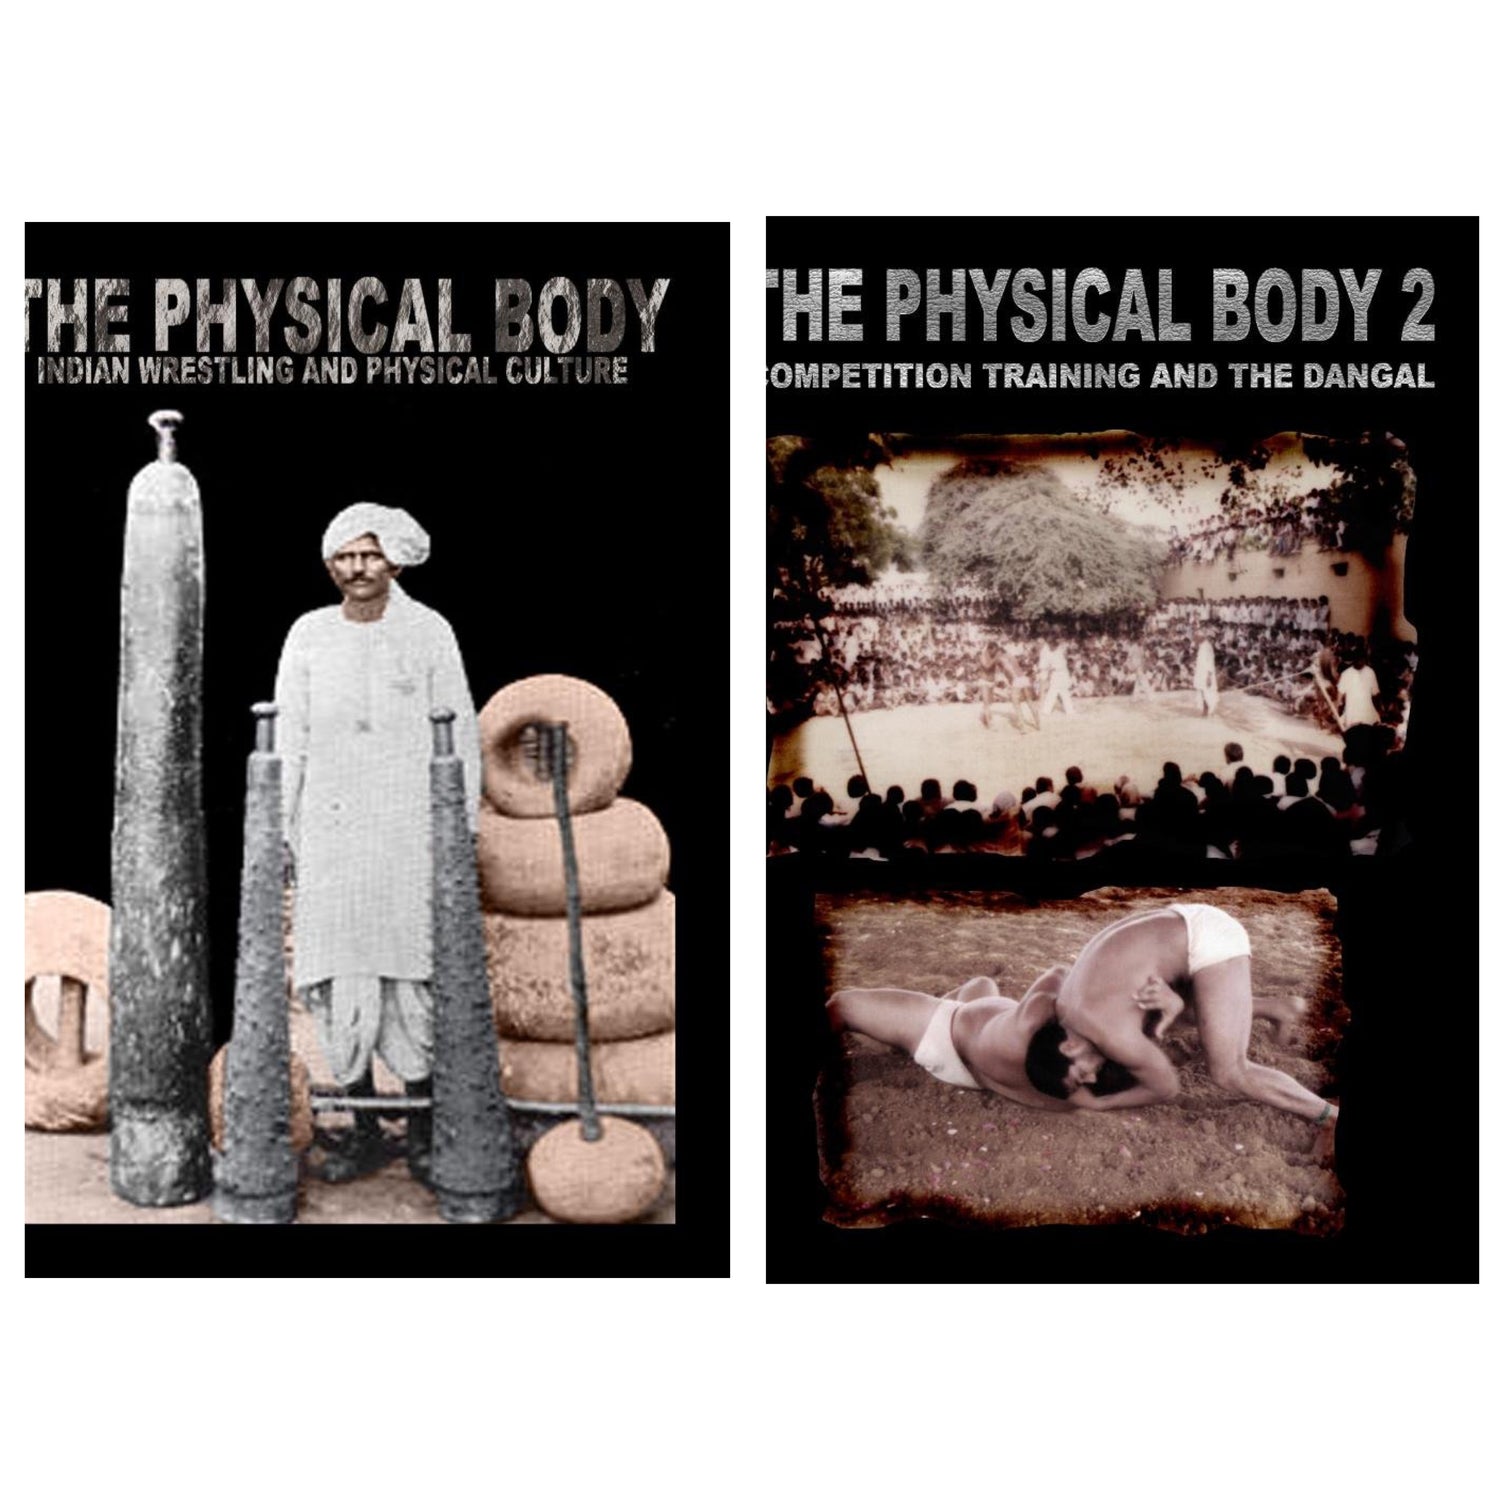 The Physical Body 1 & 2: Conjunto de DVD documental indio sobre lucha libre y fitness (usado) 